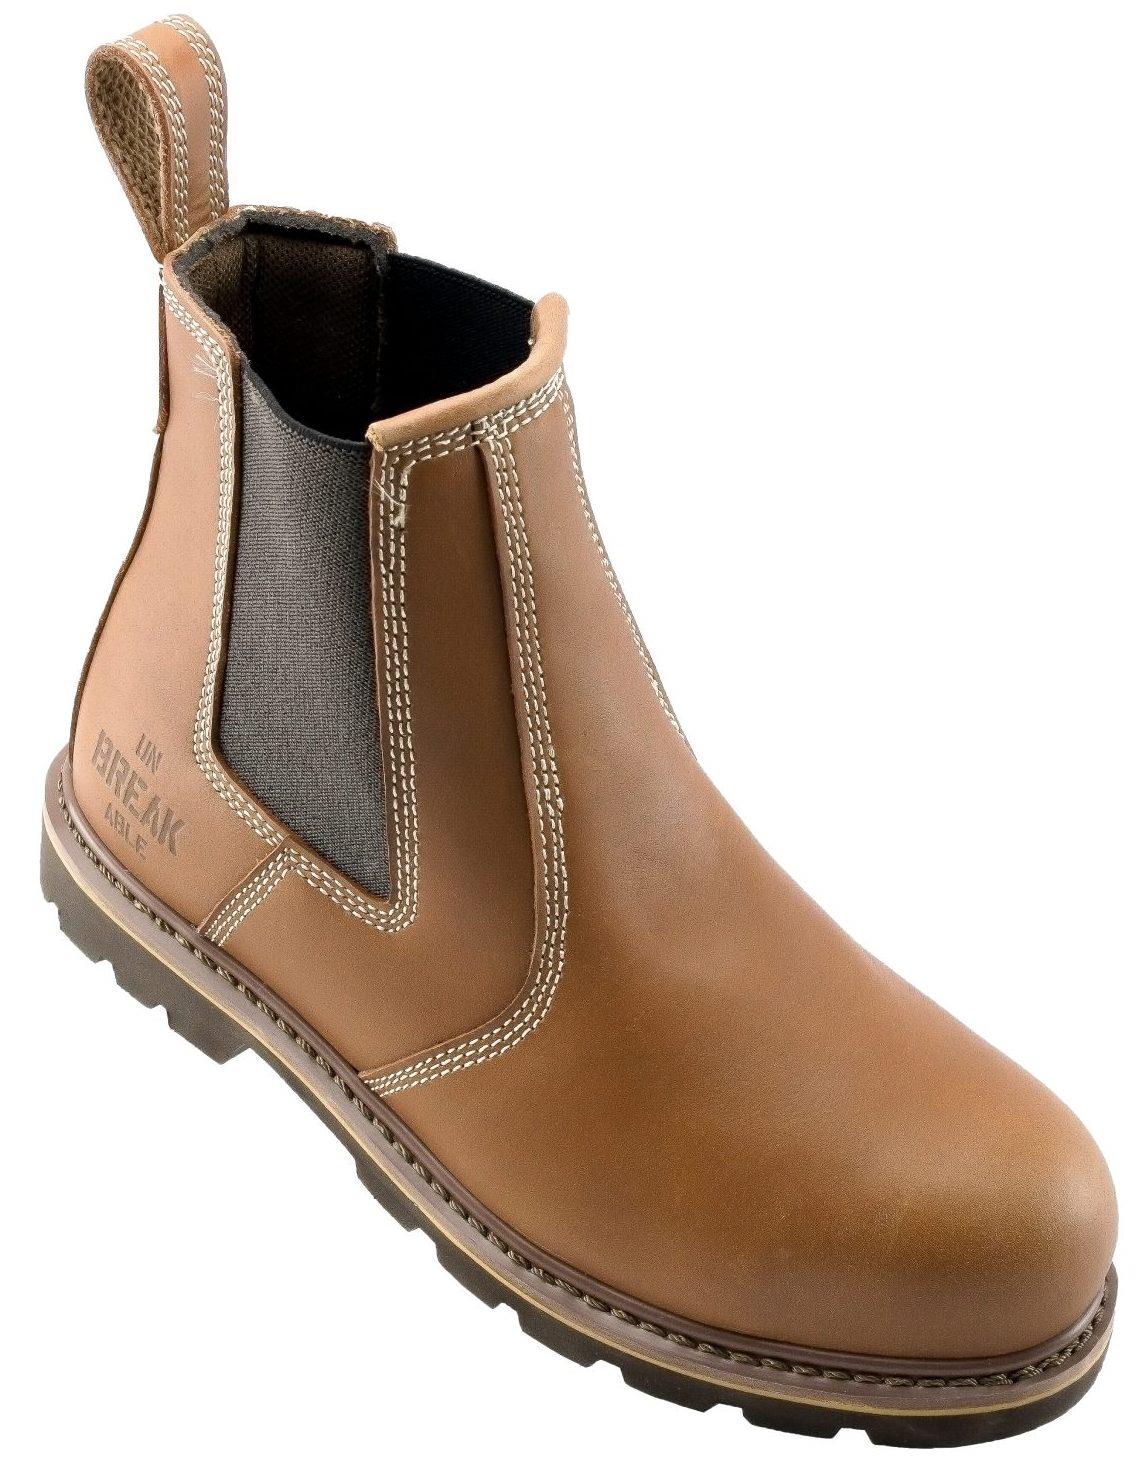 Unbreakable Highland SBP steel toe/midsole tan leather safety dealer boot #U116